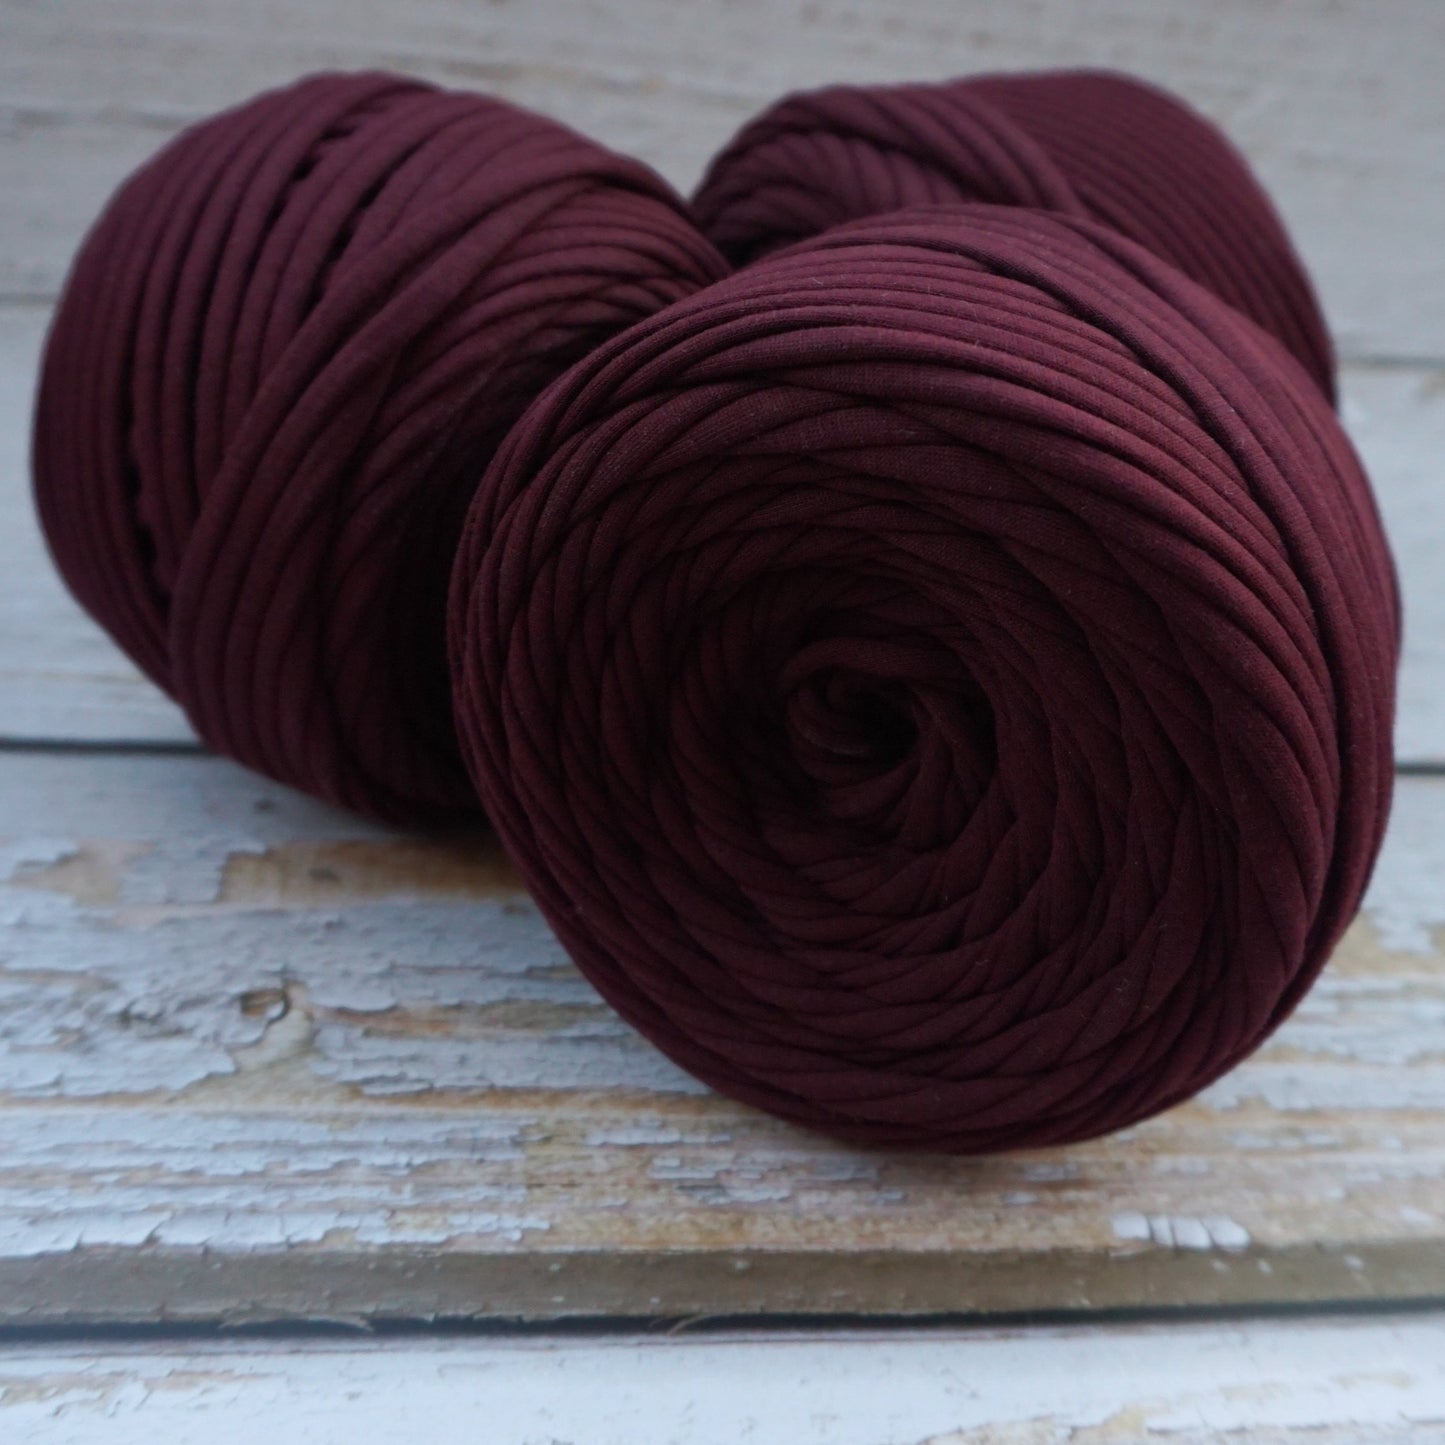 T-shirt yarn for crocheting baskets, bags, rugs and home decor. Dark burgundy